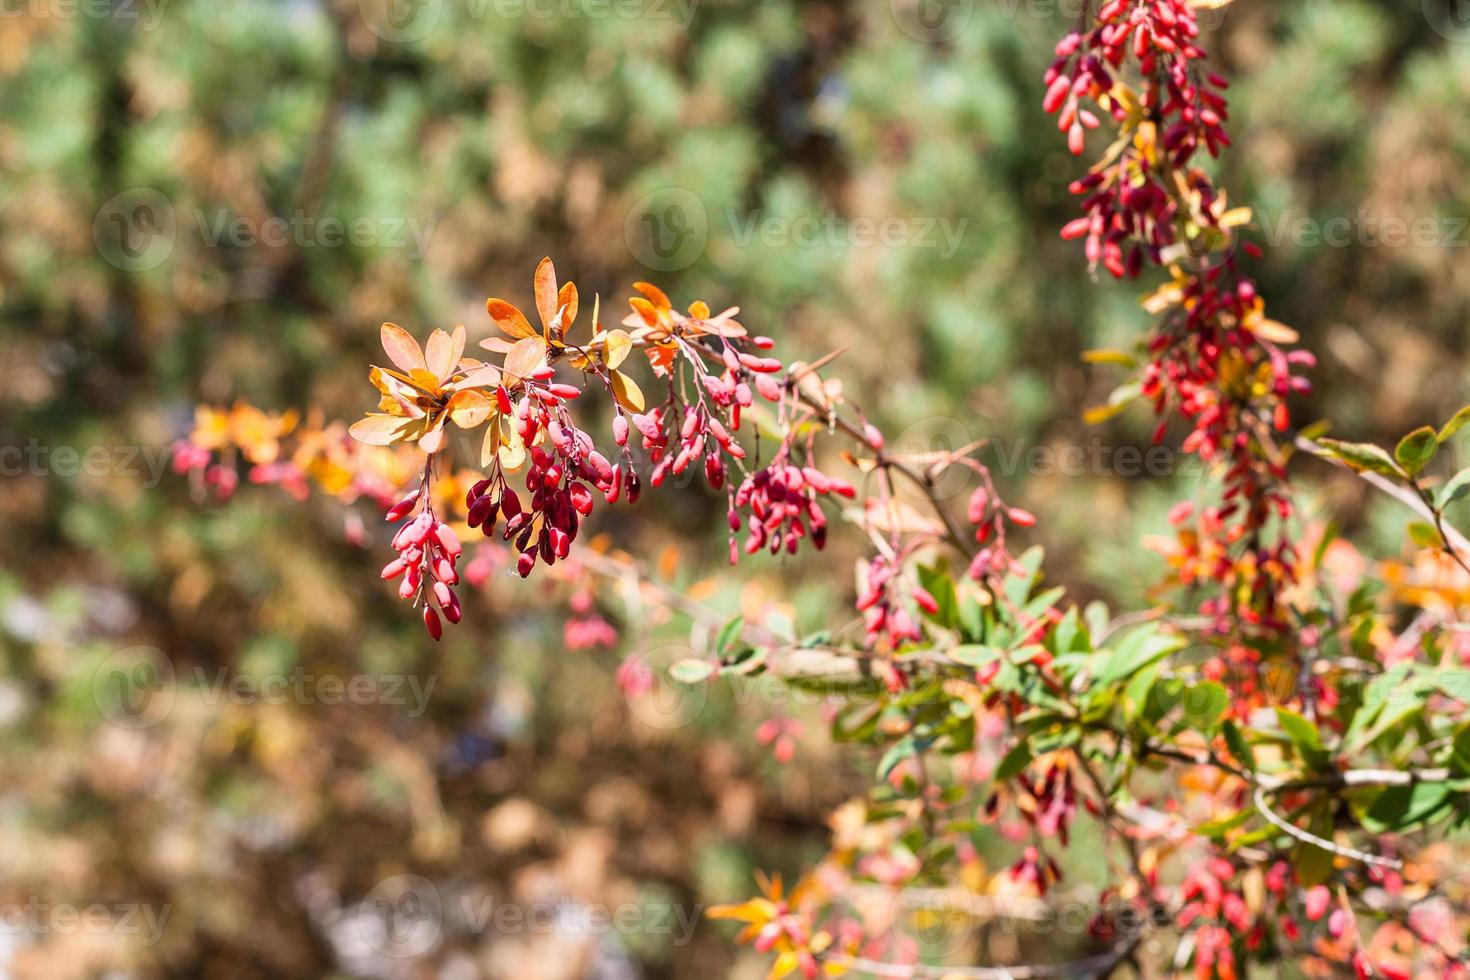 kvist av berberis buske med mogen frukt i höst foto